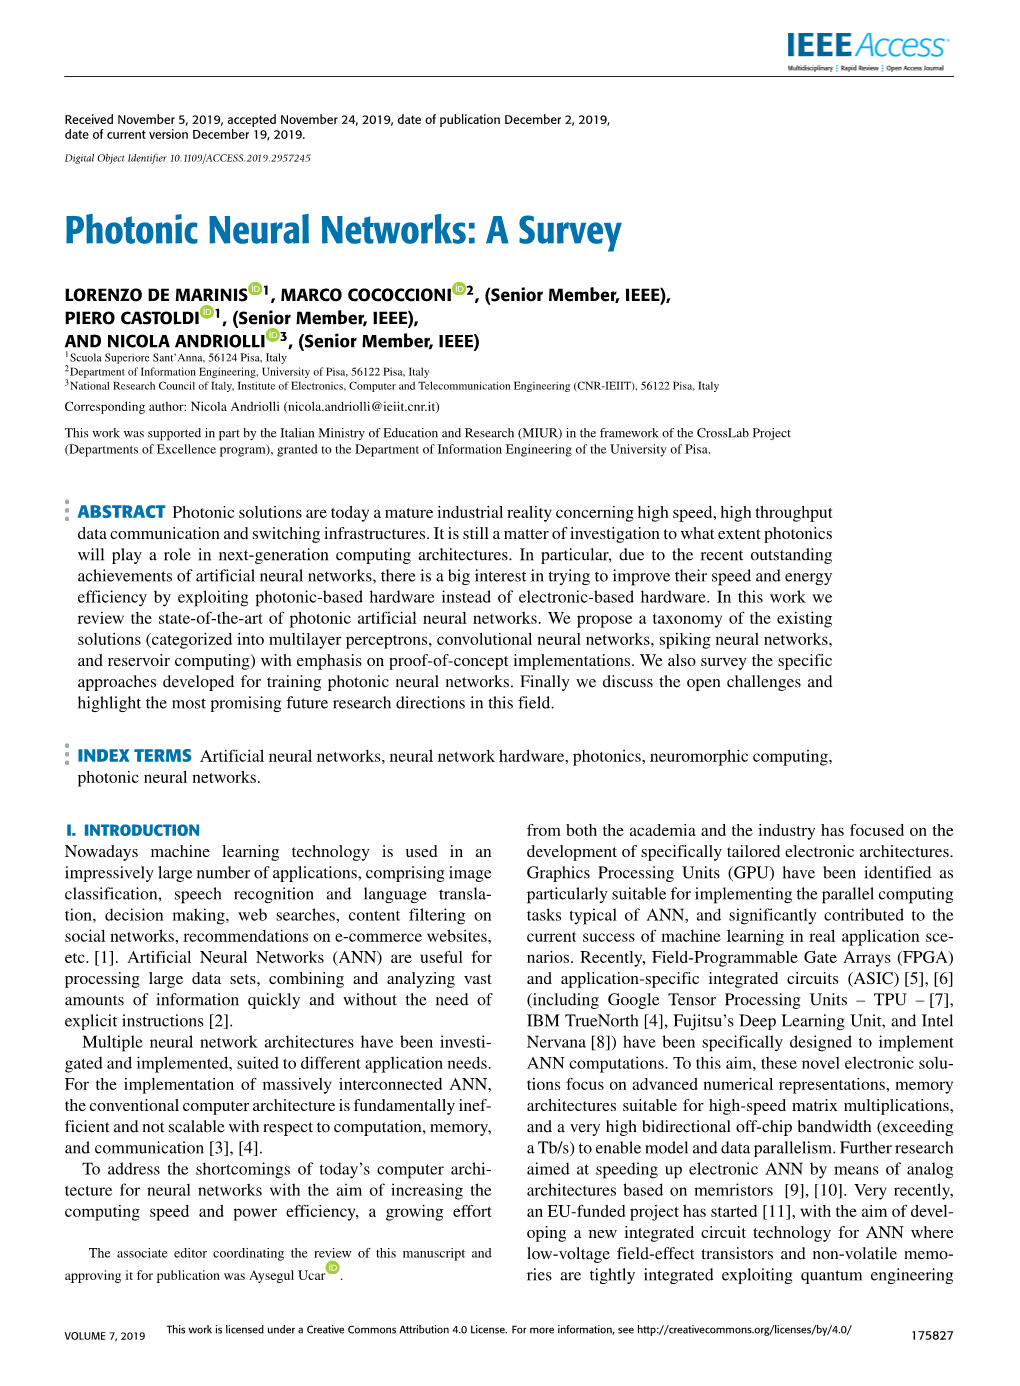 Photonic Neural Networks: a Survey